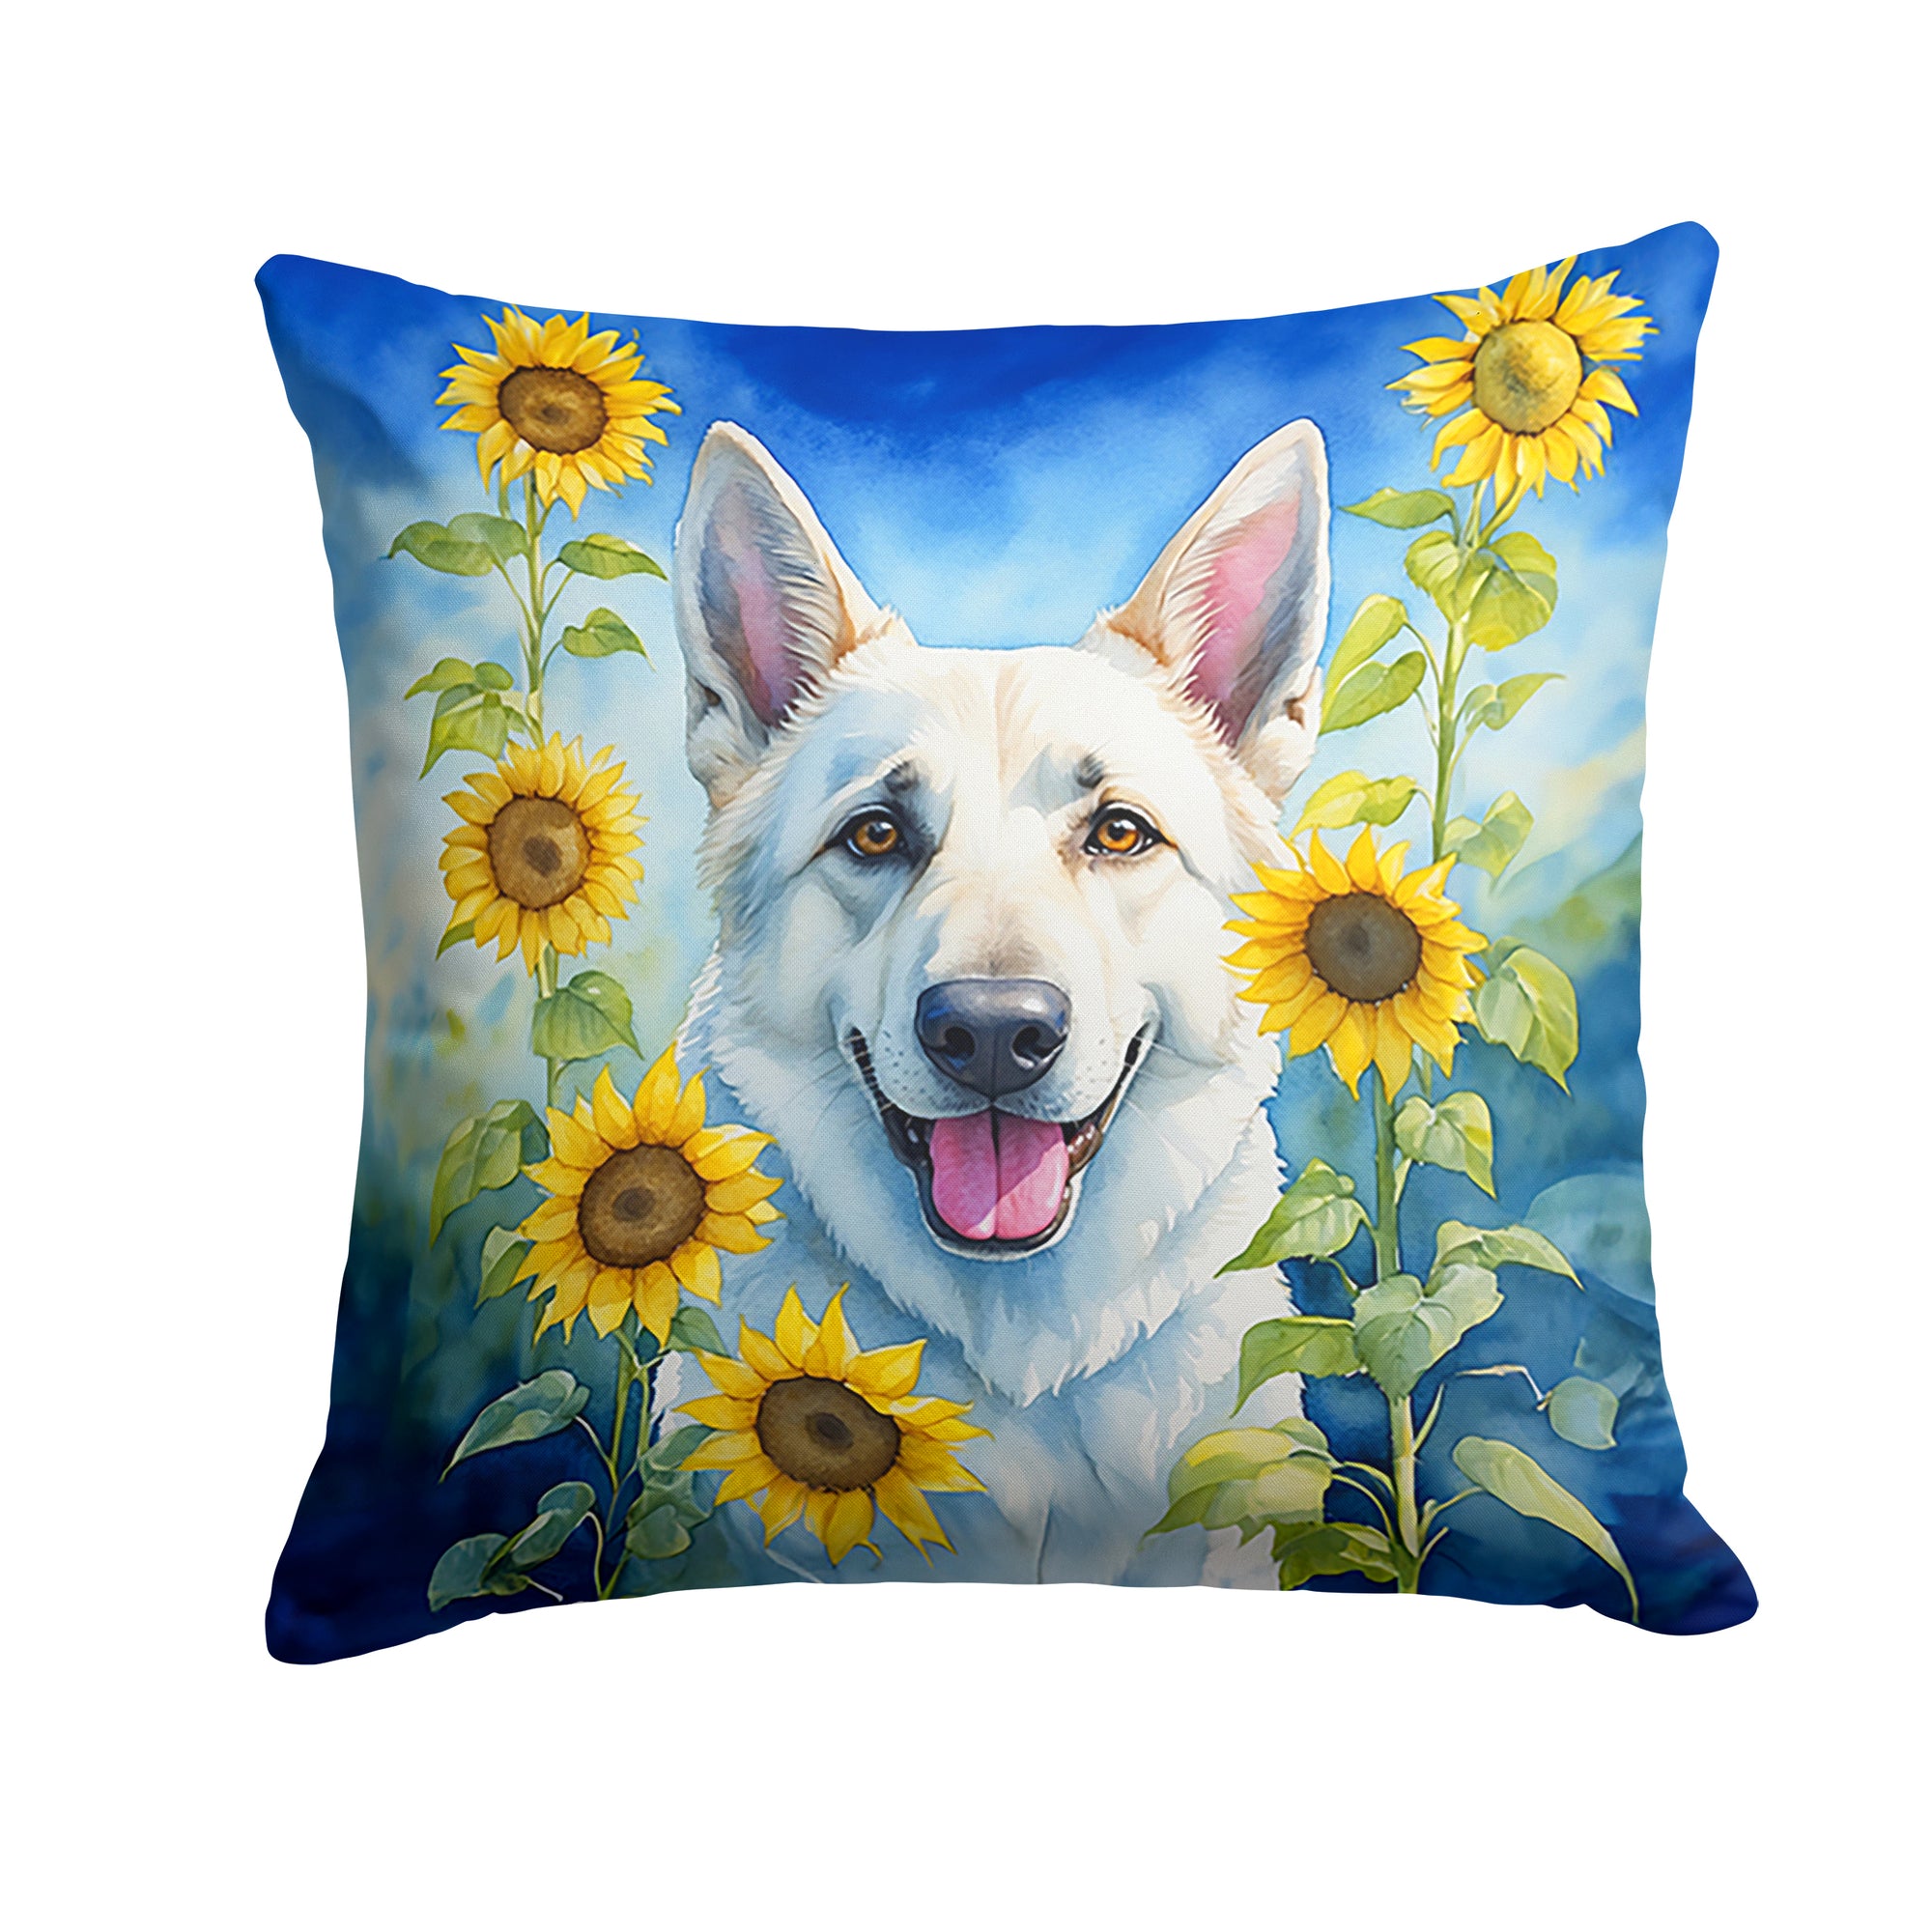 Buy this White German Shepherd in Sunflowers Throw Pillow